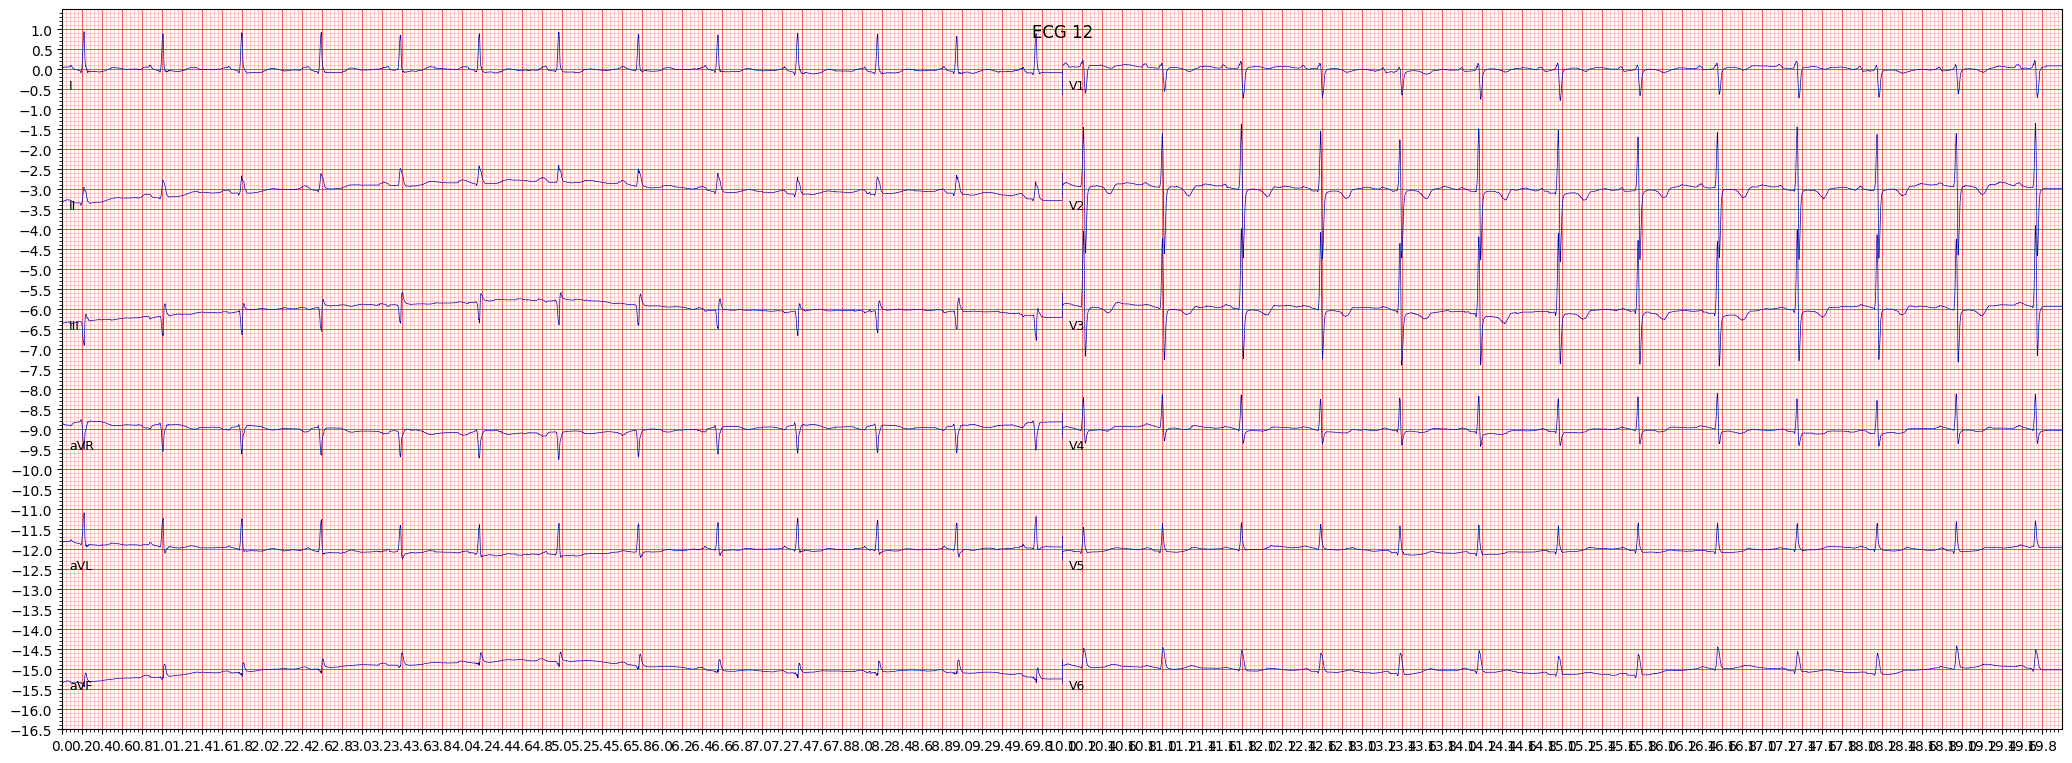 inferoposterolateral myocardial infarction (IPLMI) example 6454